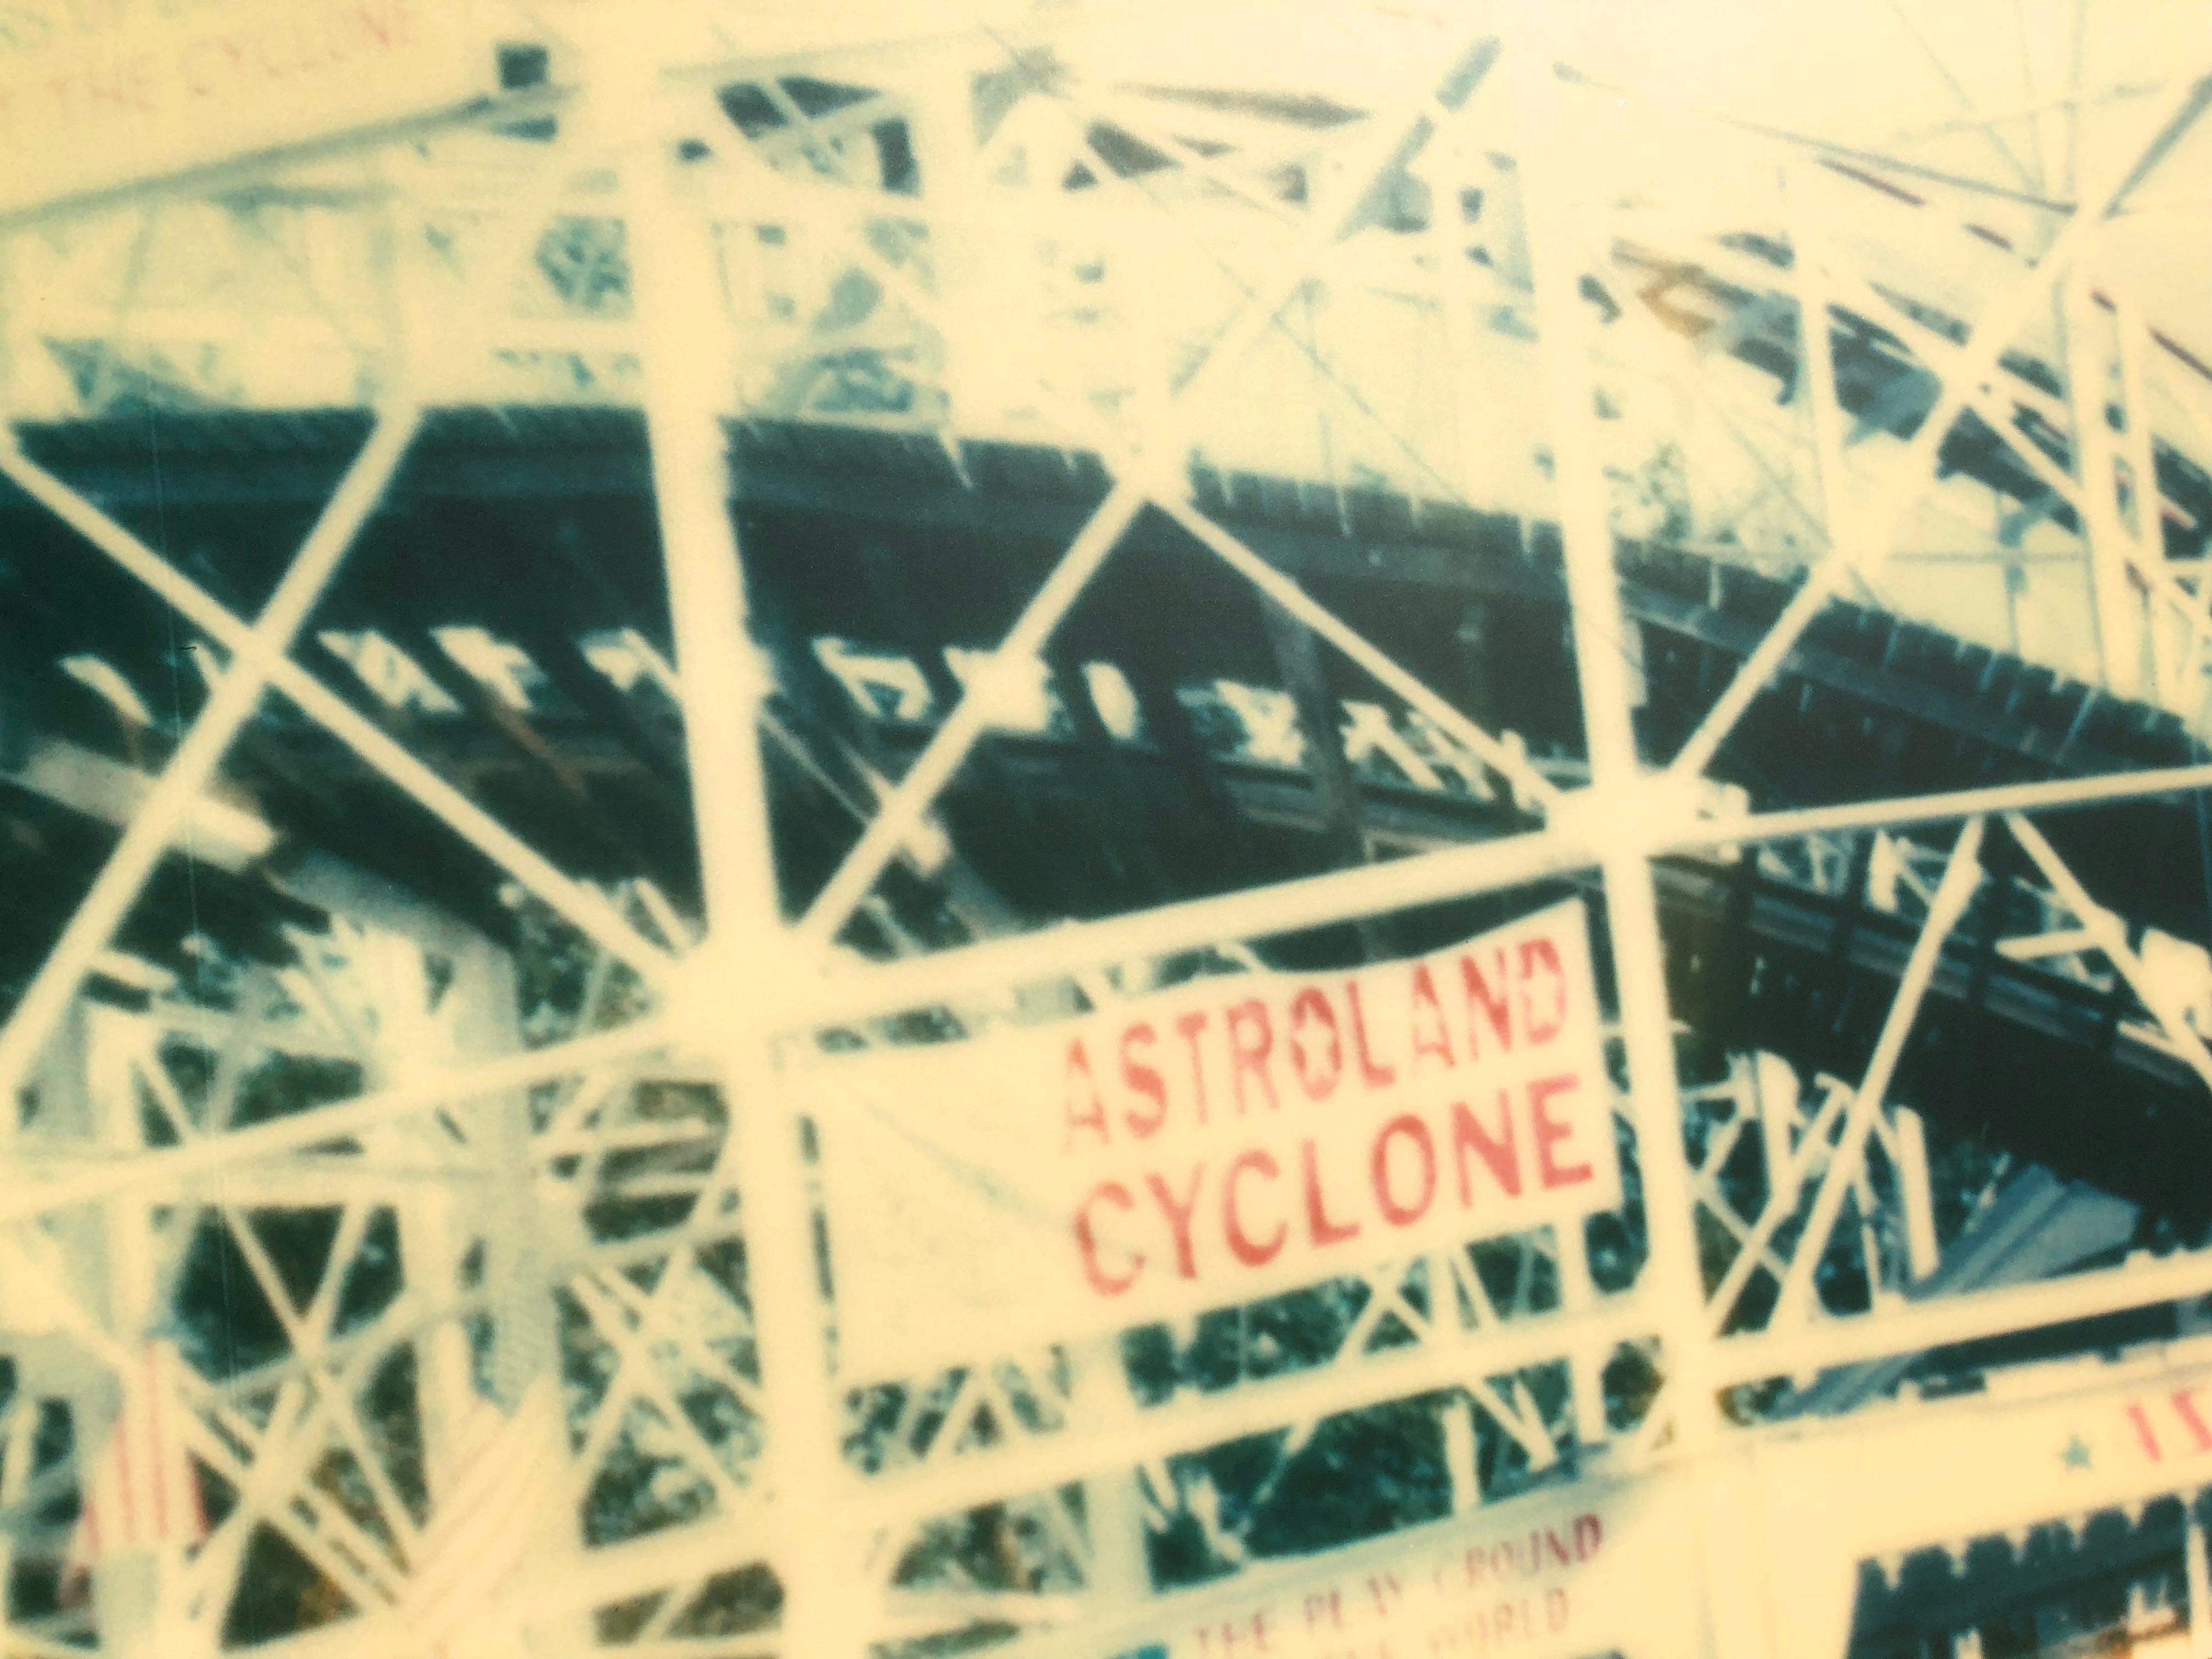 Cyclone, Coney Island, 21 Century, Contemporary, Icons, Landscape 1